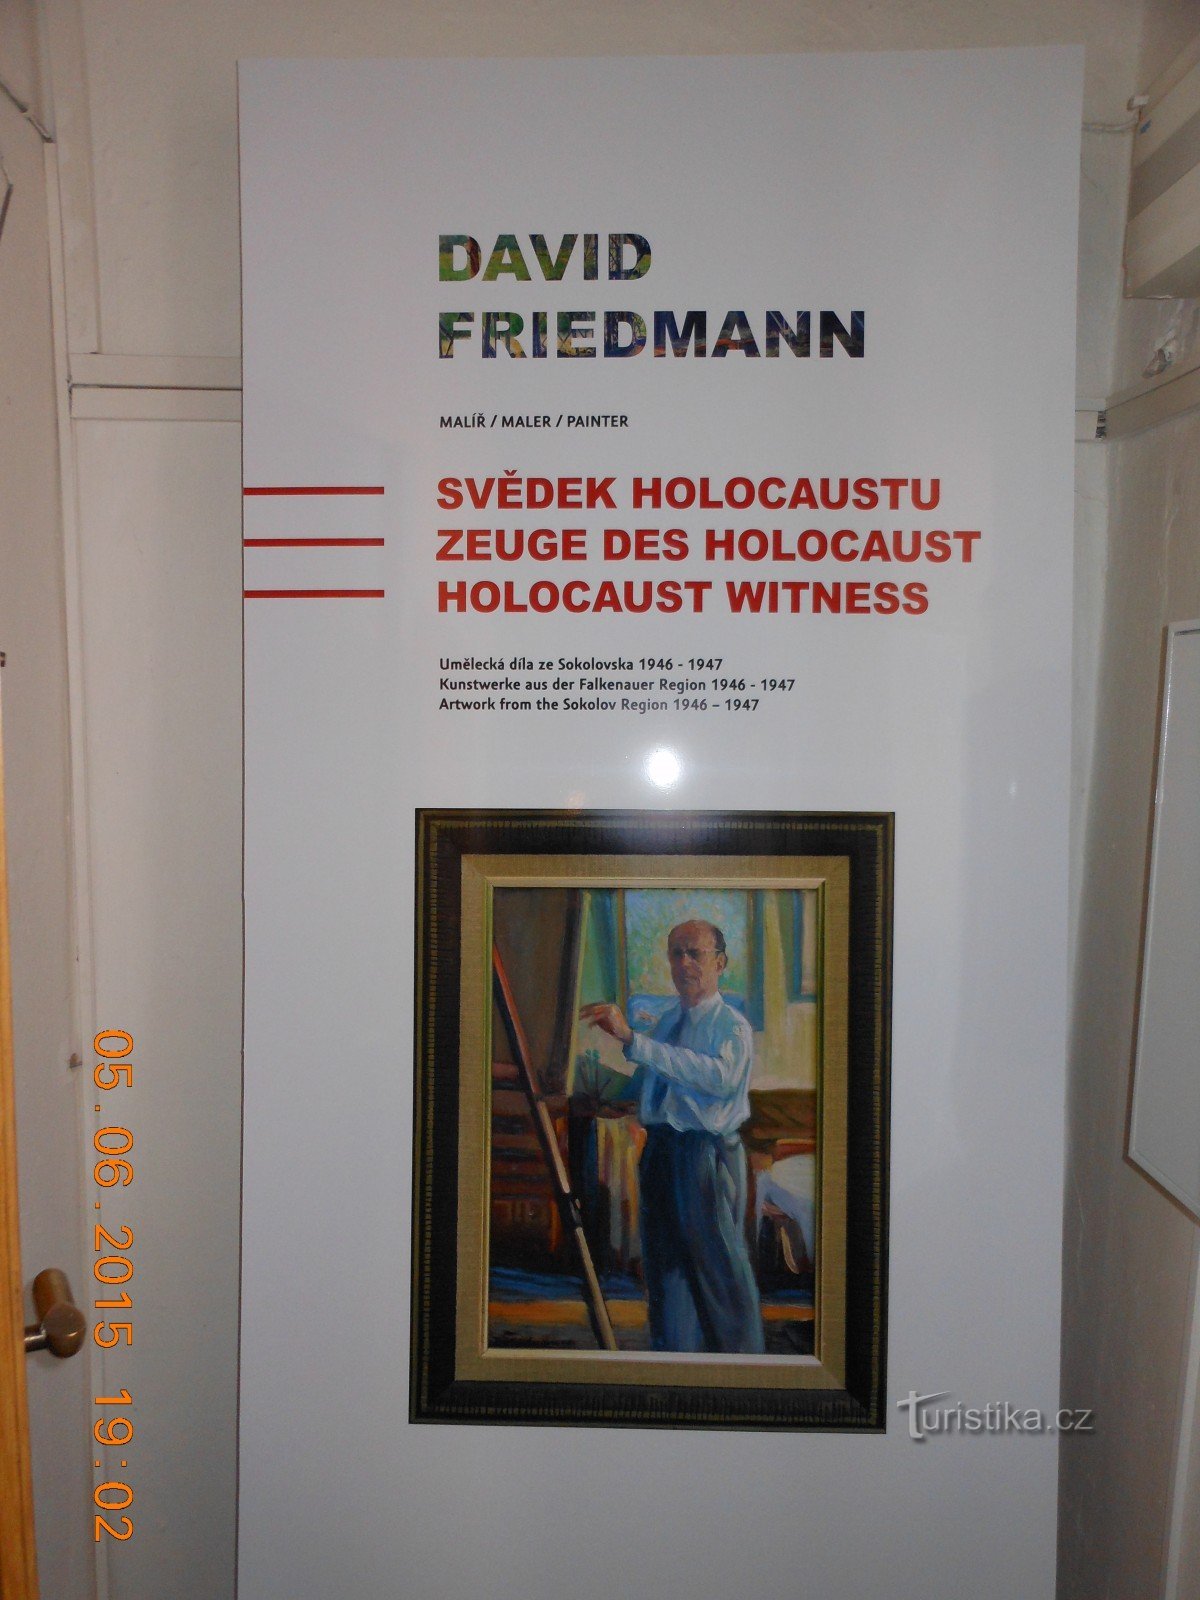 Expoziție DAVID FRIEDMANN - Muzeul Sokolov